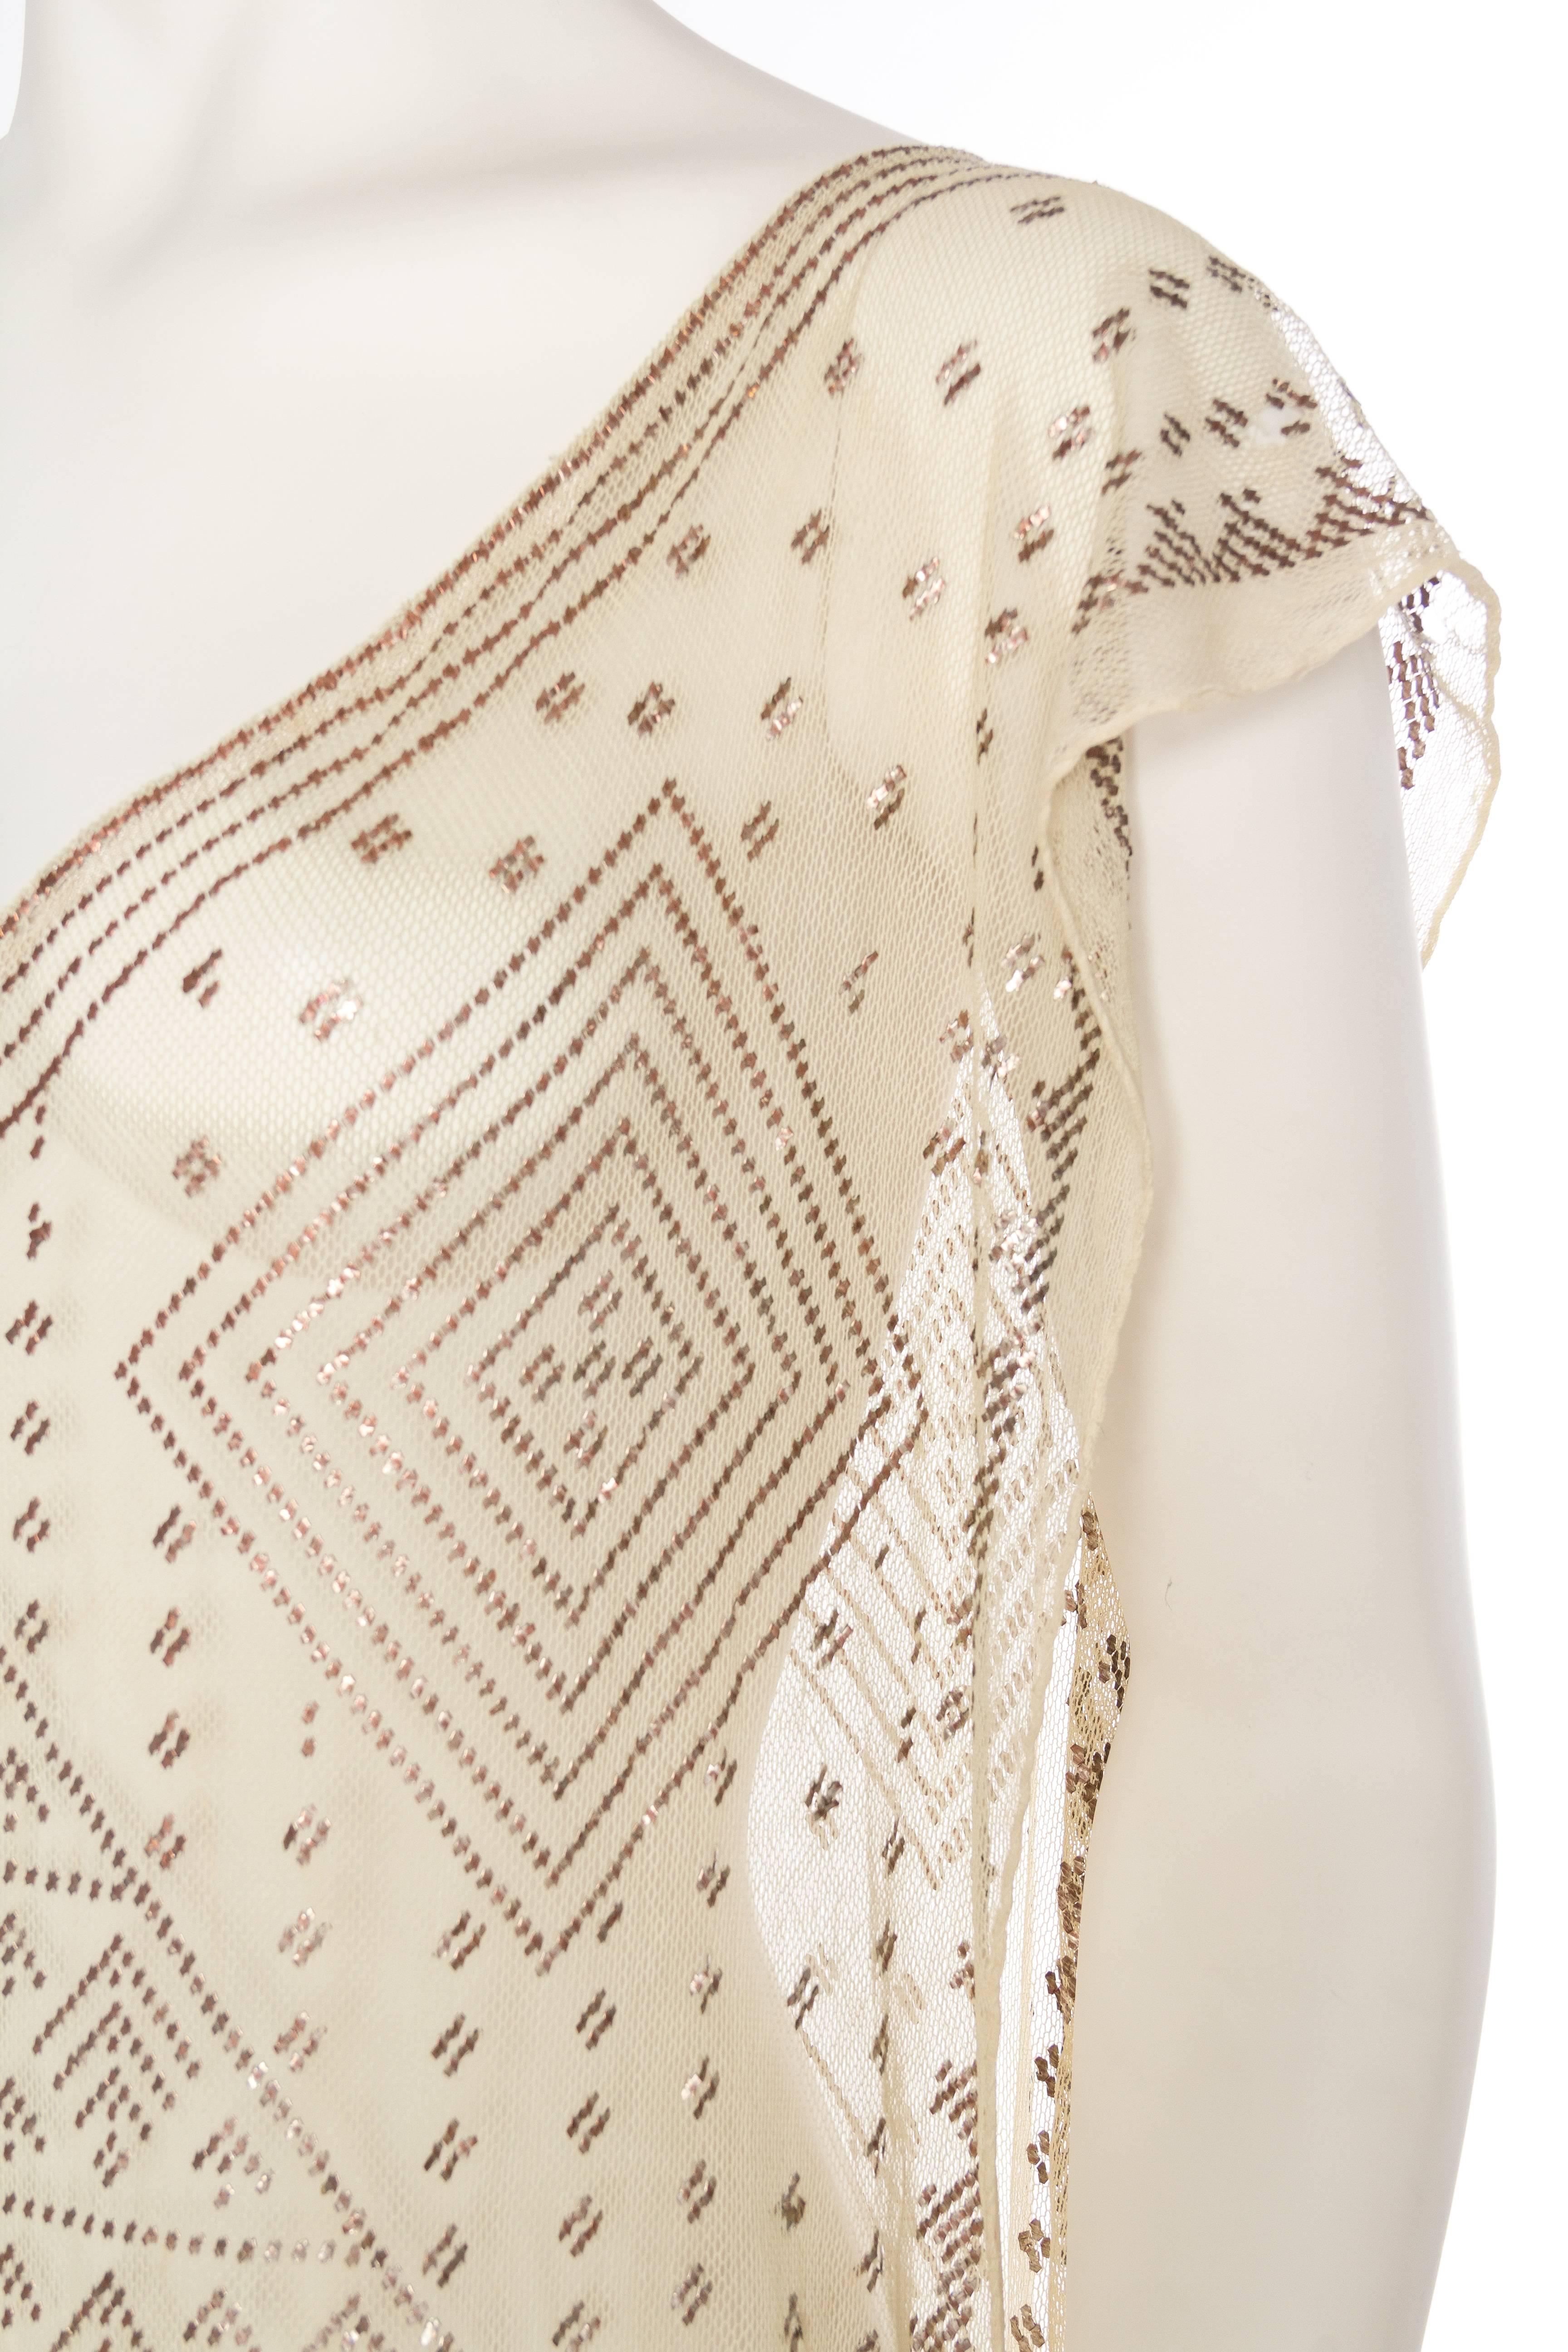 Women's 1920s Egyptian Assuit Net and Silver Dress